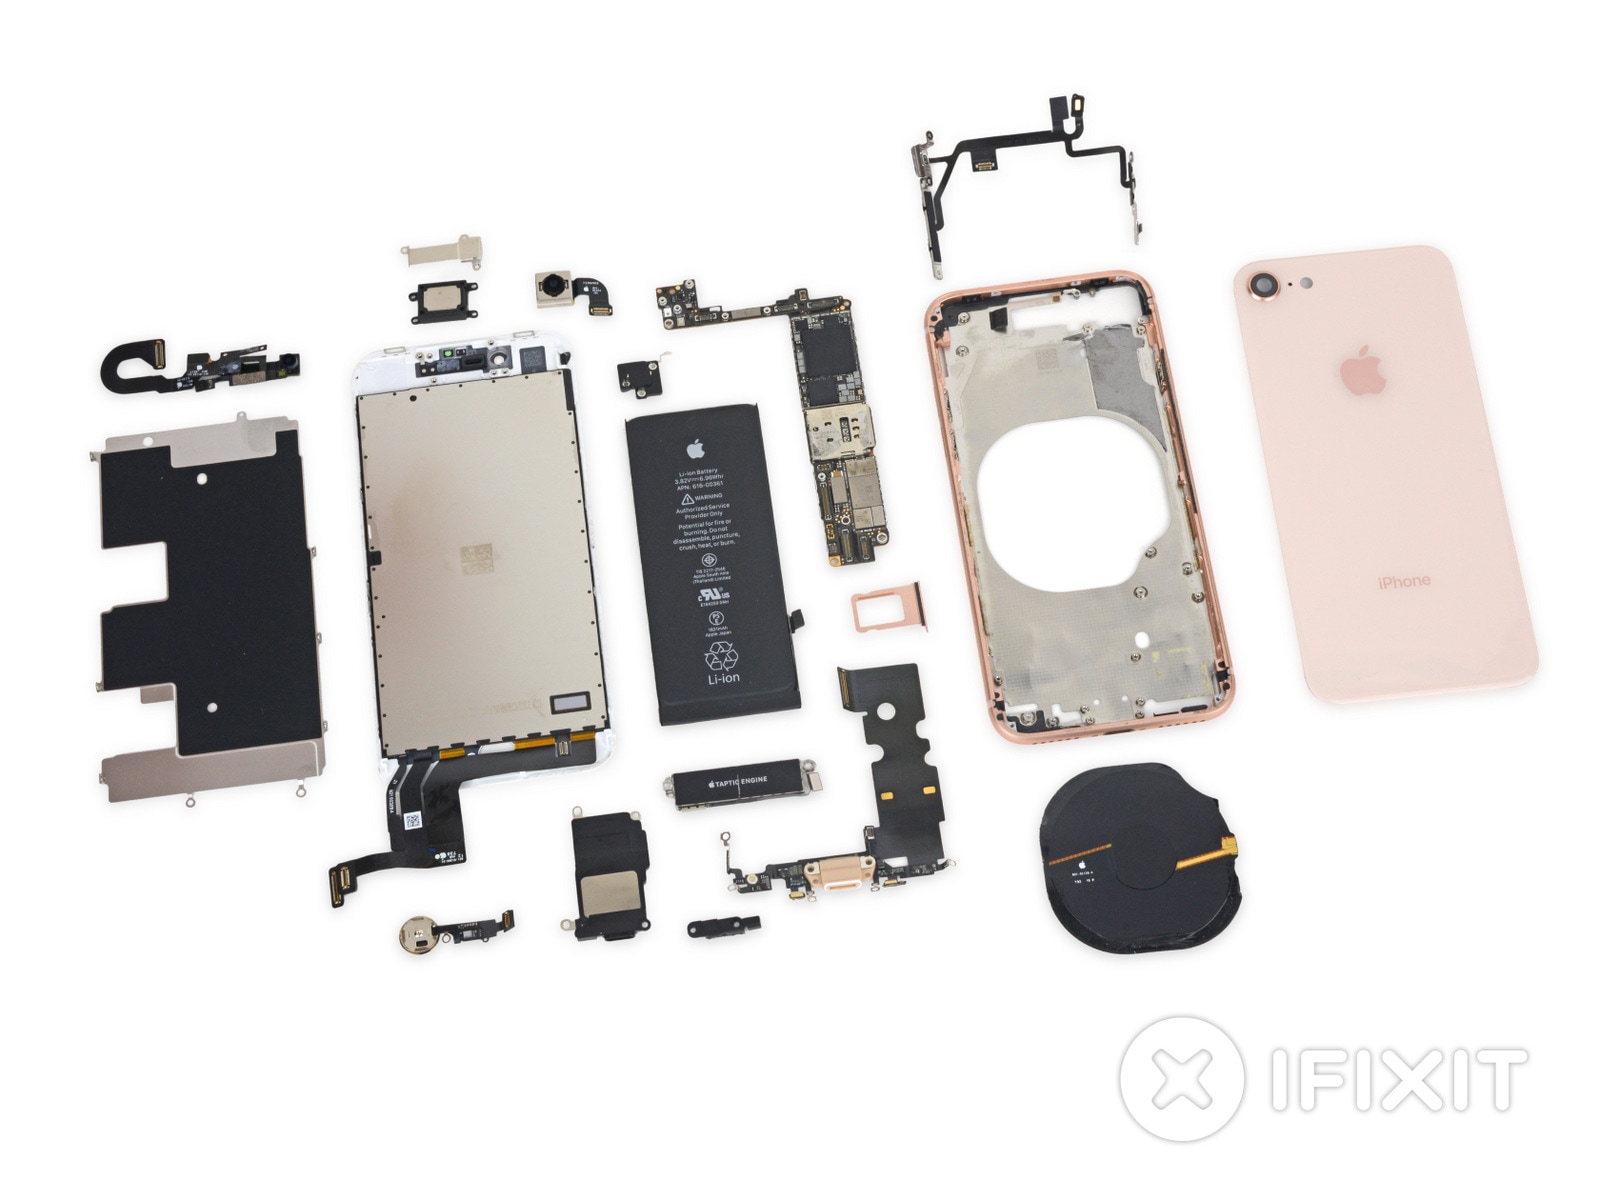 iPhone 8 desmontado pela iFixit